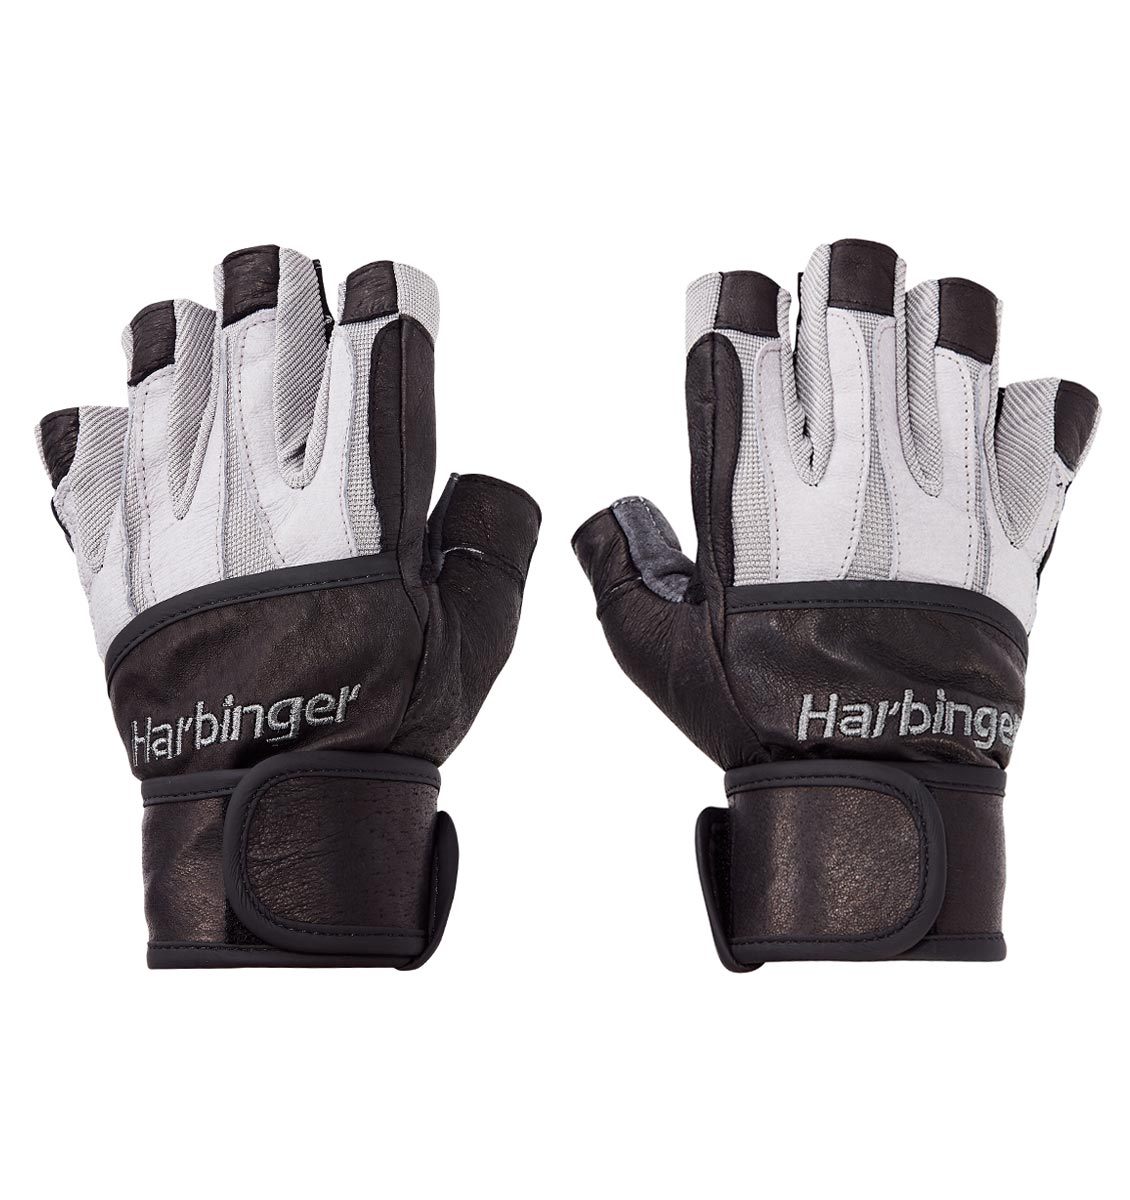 1310 Harbinger Bioform Wrist Wrap Gloves Pair Top